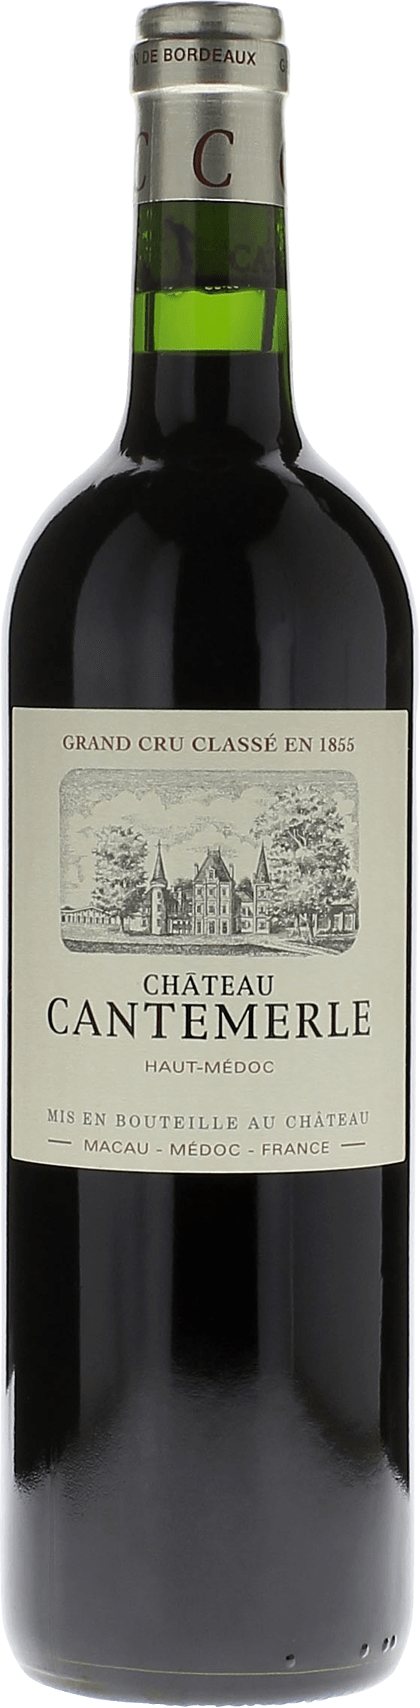 Cantemerle 2001 5me Grand cru class Mdoc, Bordeaux rouge